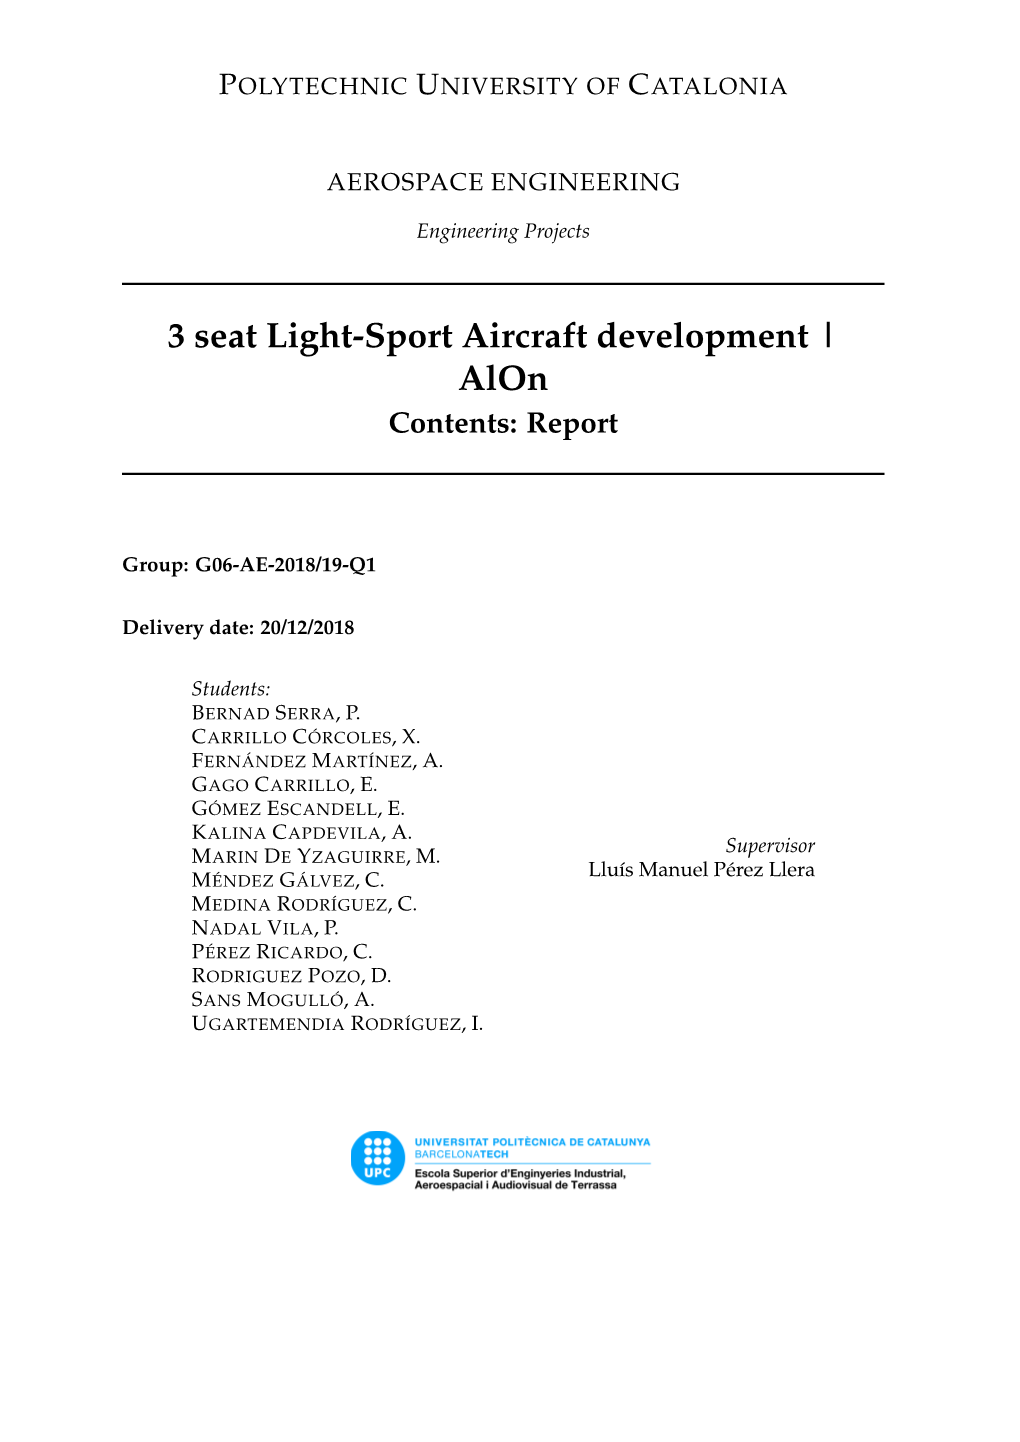 3 Seat Light-Sport Aircraft Development | Alon Contents: Report